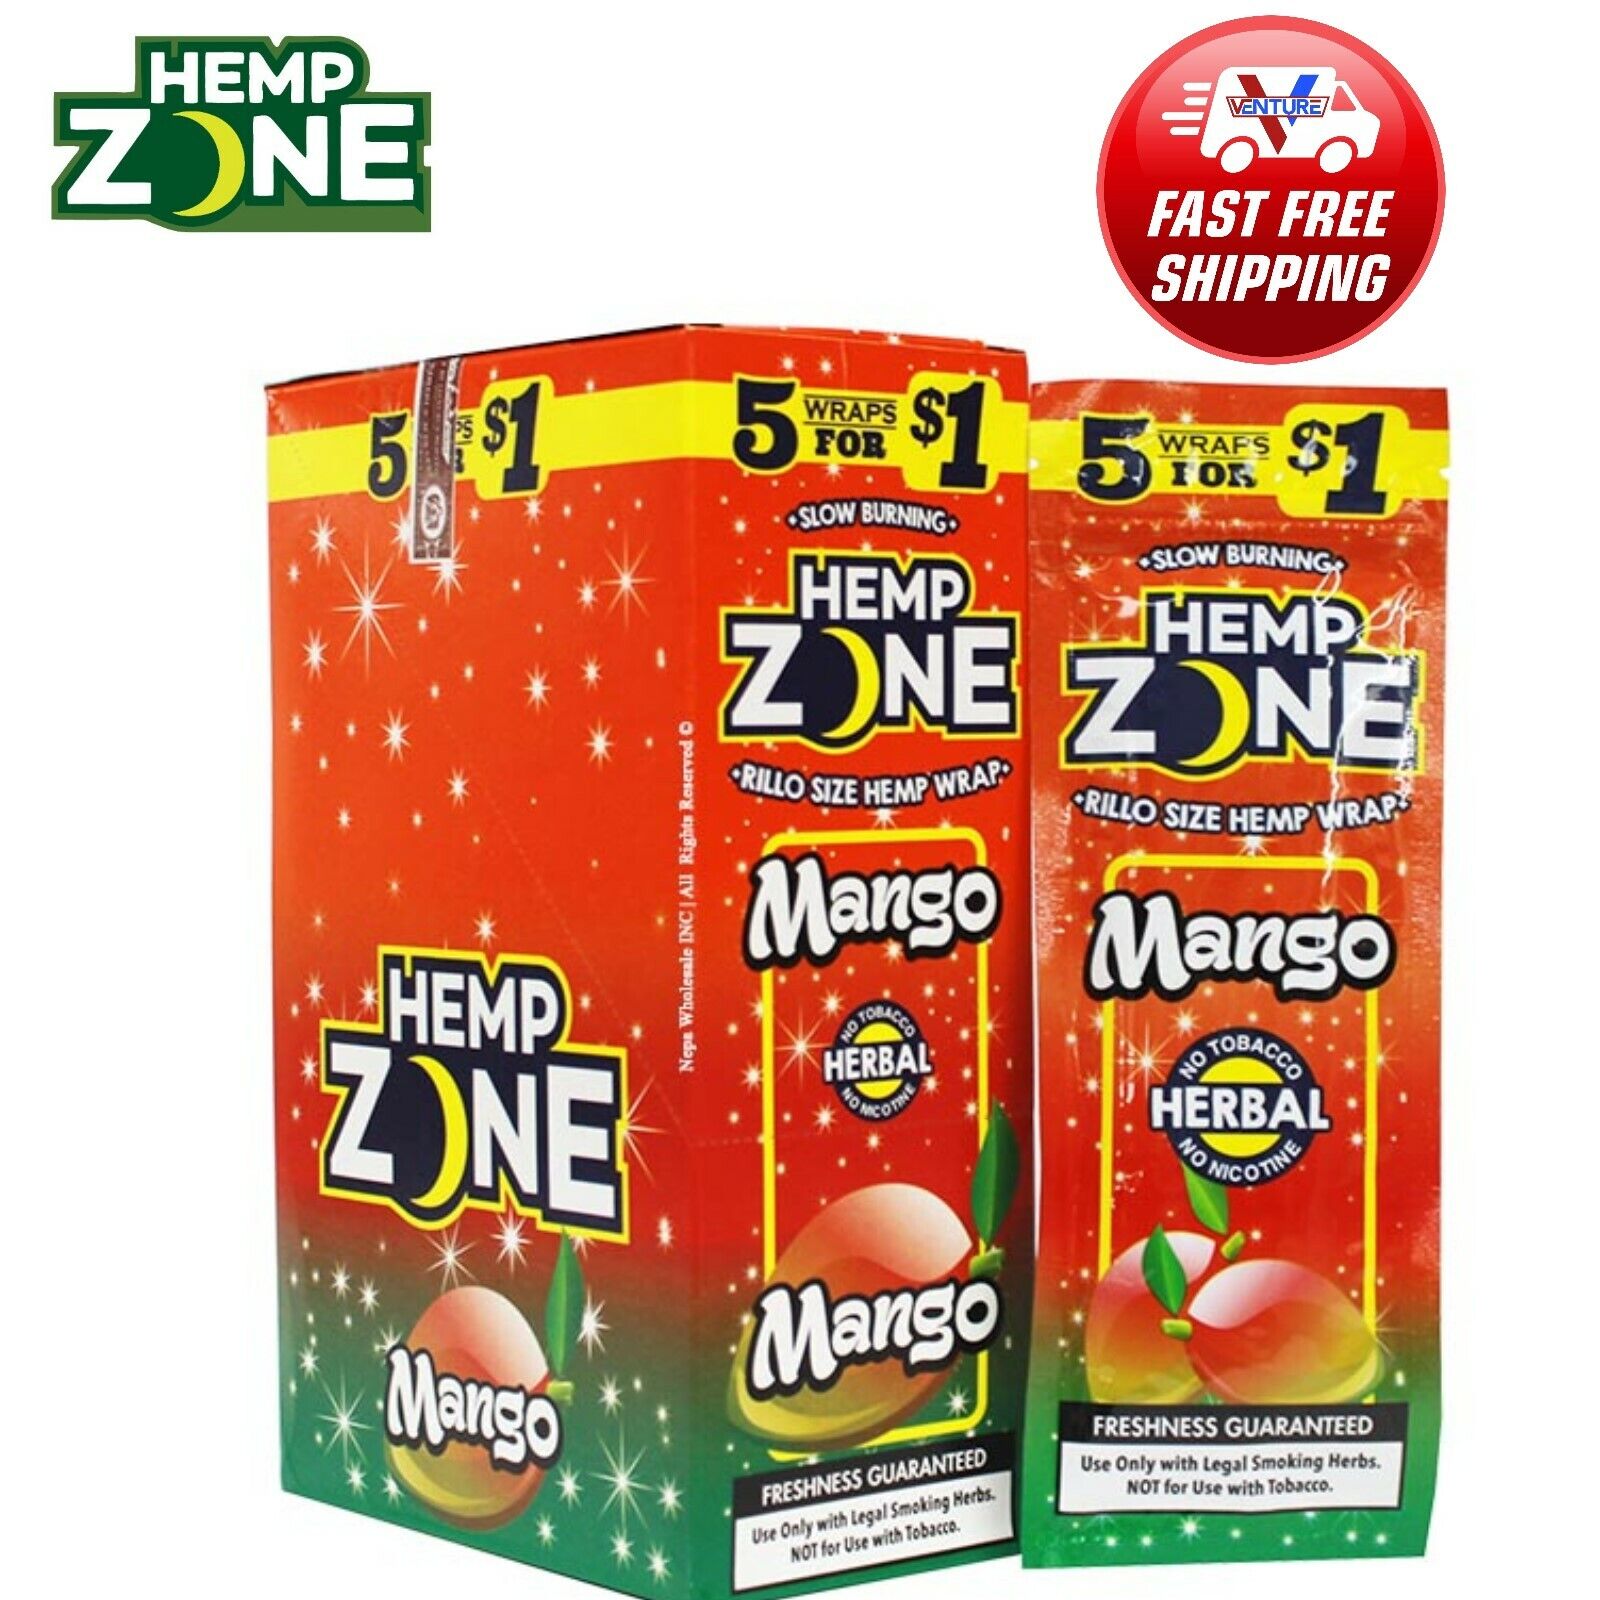 H. Zone Organic Natural Herbal Wrap MANGO Full Box 15/5CT - 75 Wraps Total